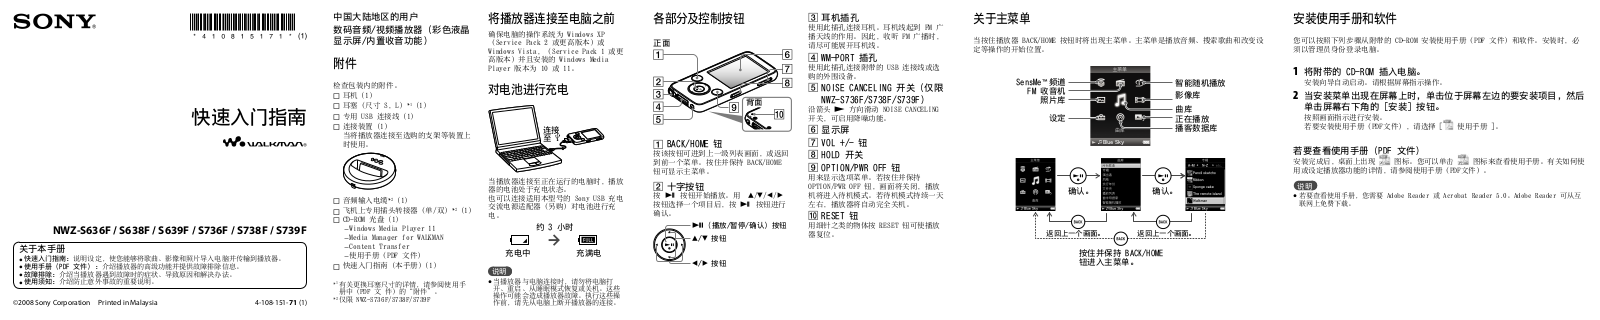 Sony NWD-S736F User Manual